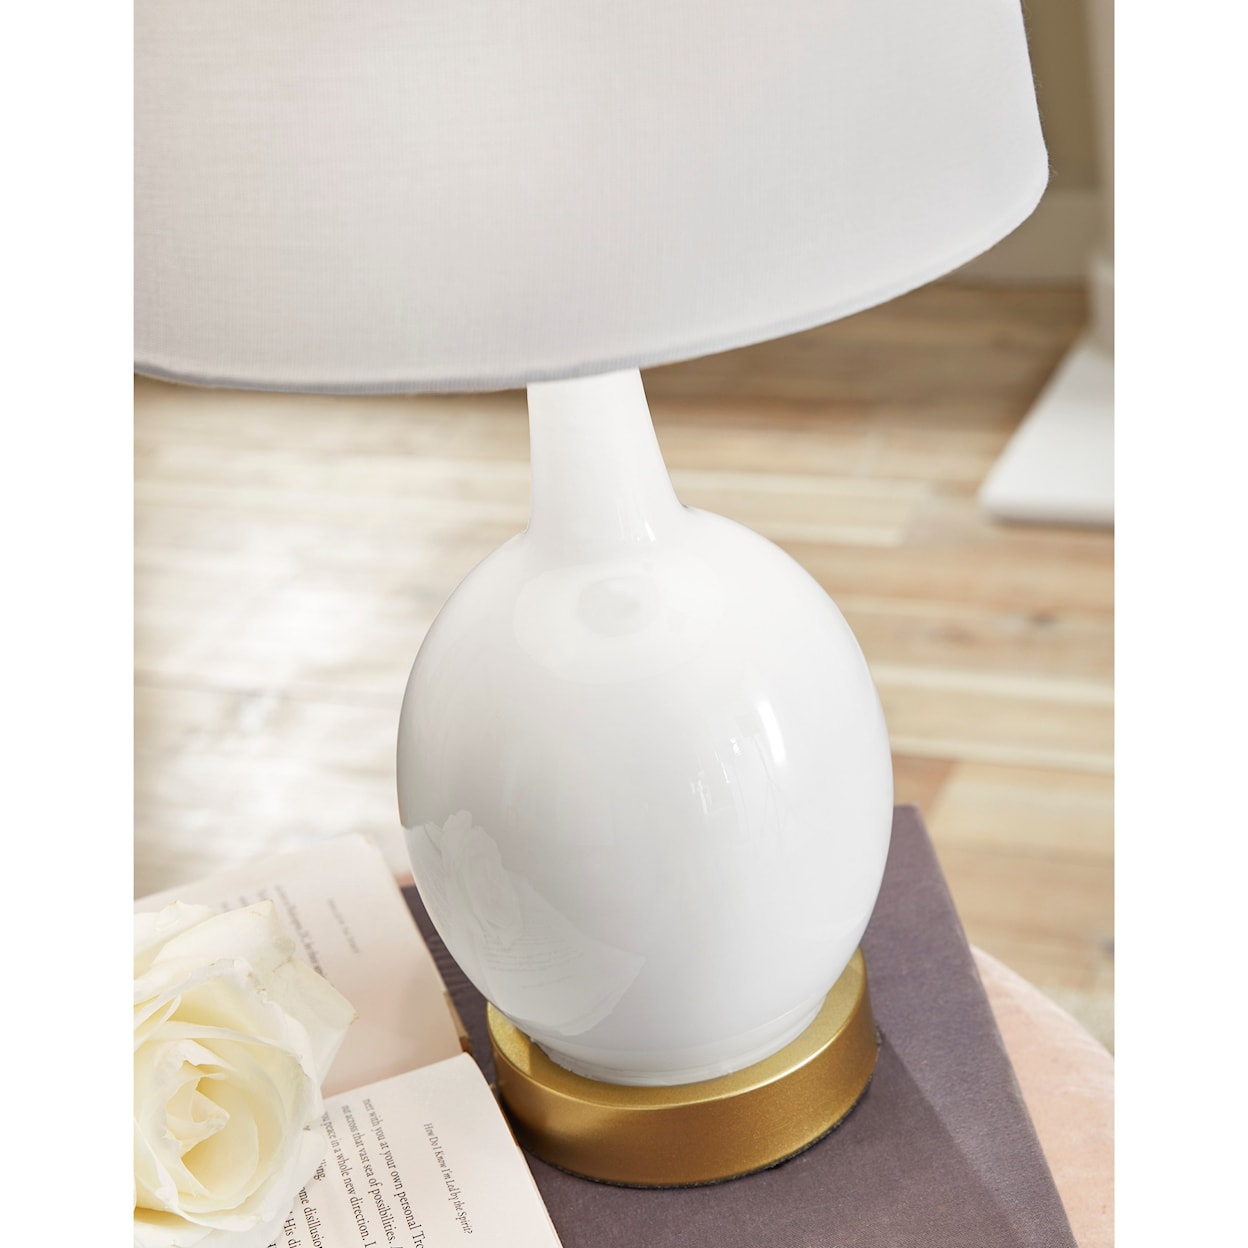 Ashley Signature Design Lamps - Contemporary Arlomore White Glass Table Lamp